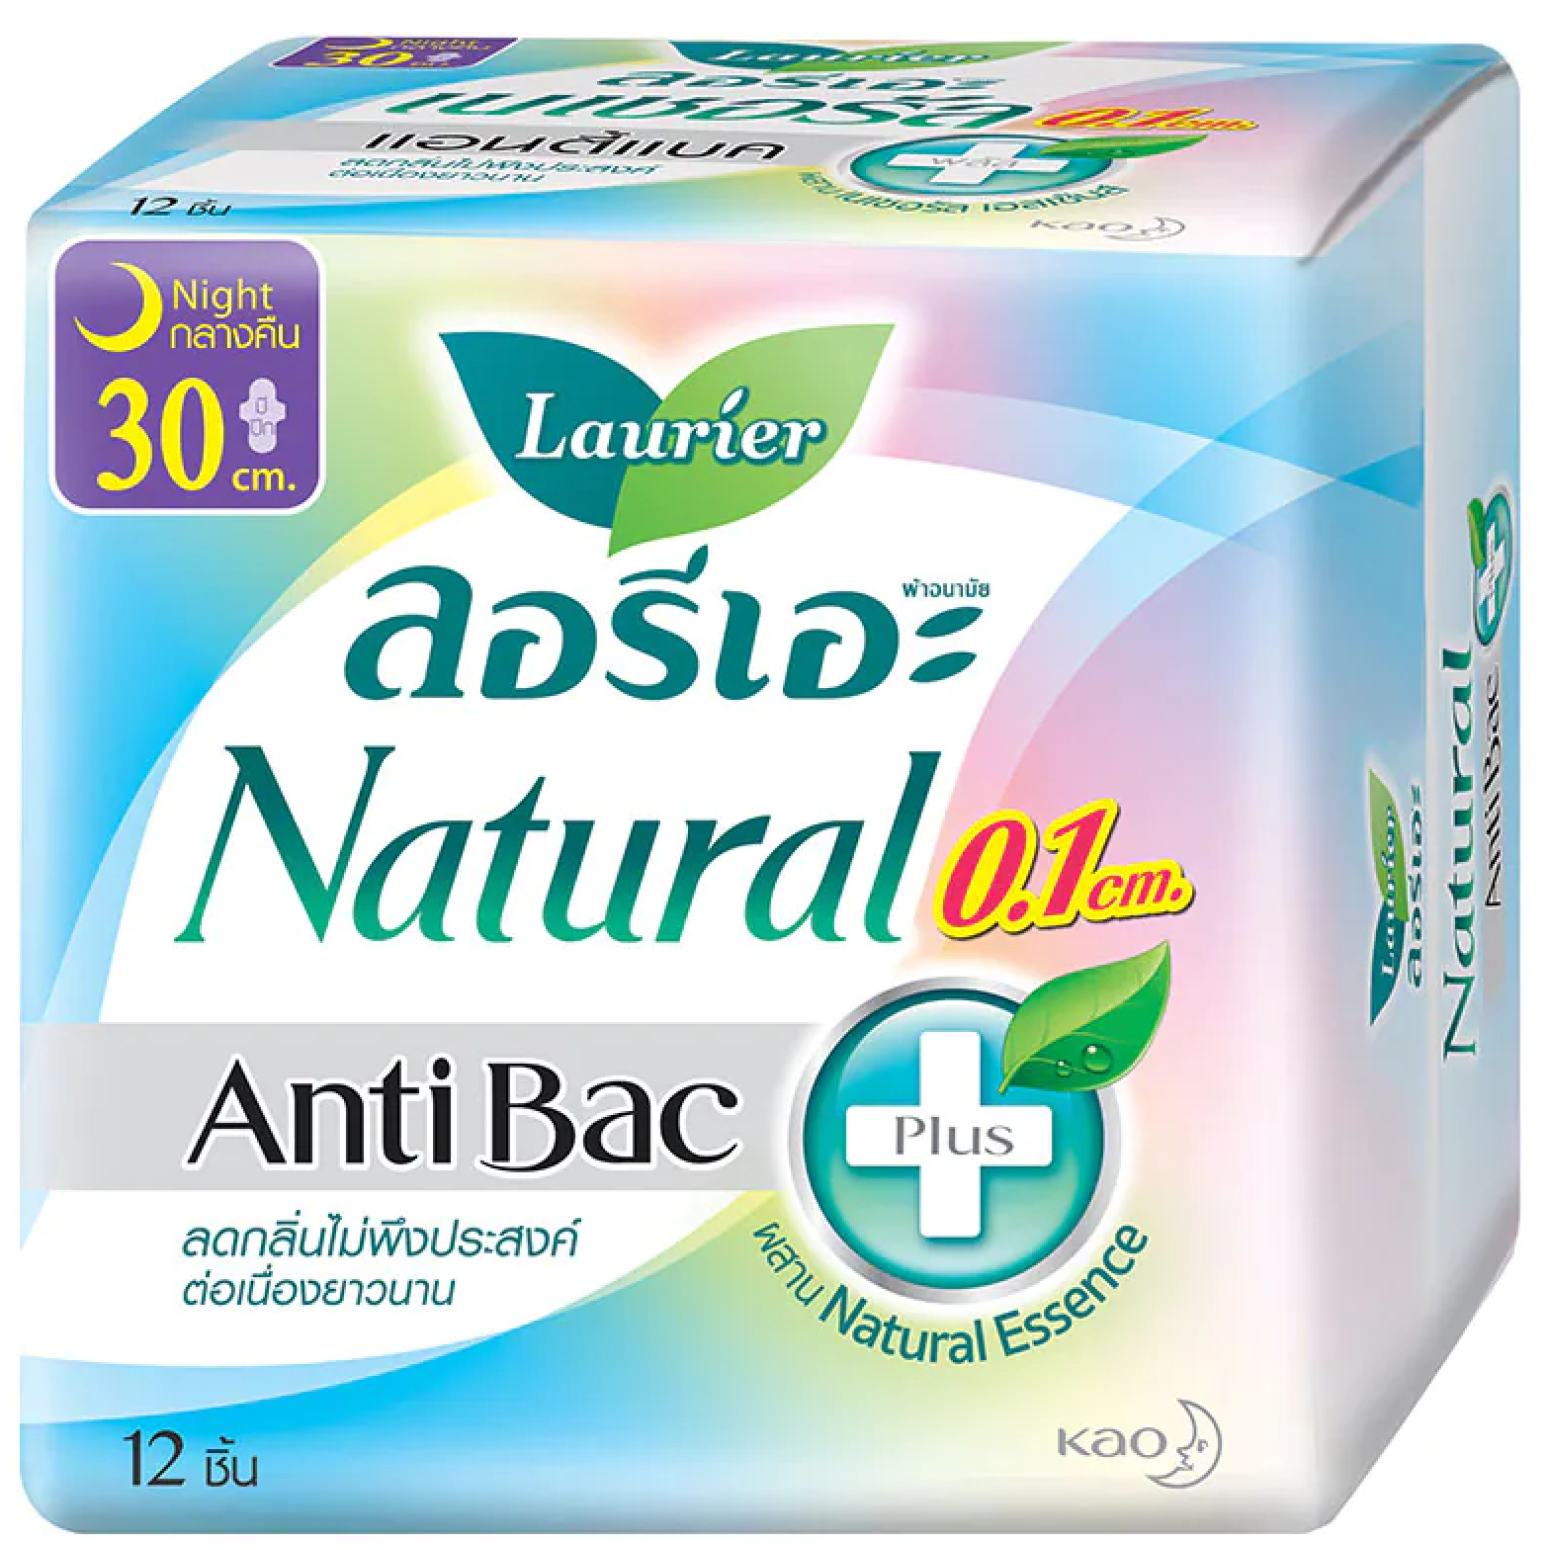 Laurier Natural Anti Bac Plus 0.1 Sanitary Napkin Night Wing 30cm 12pcs